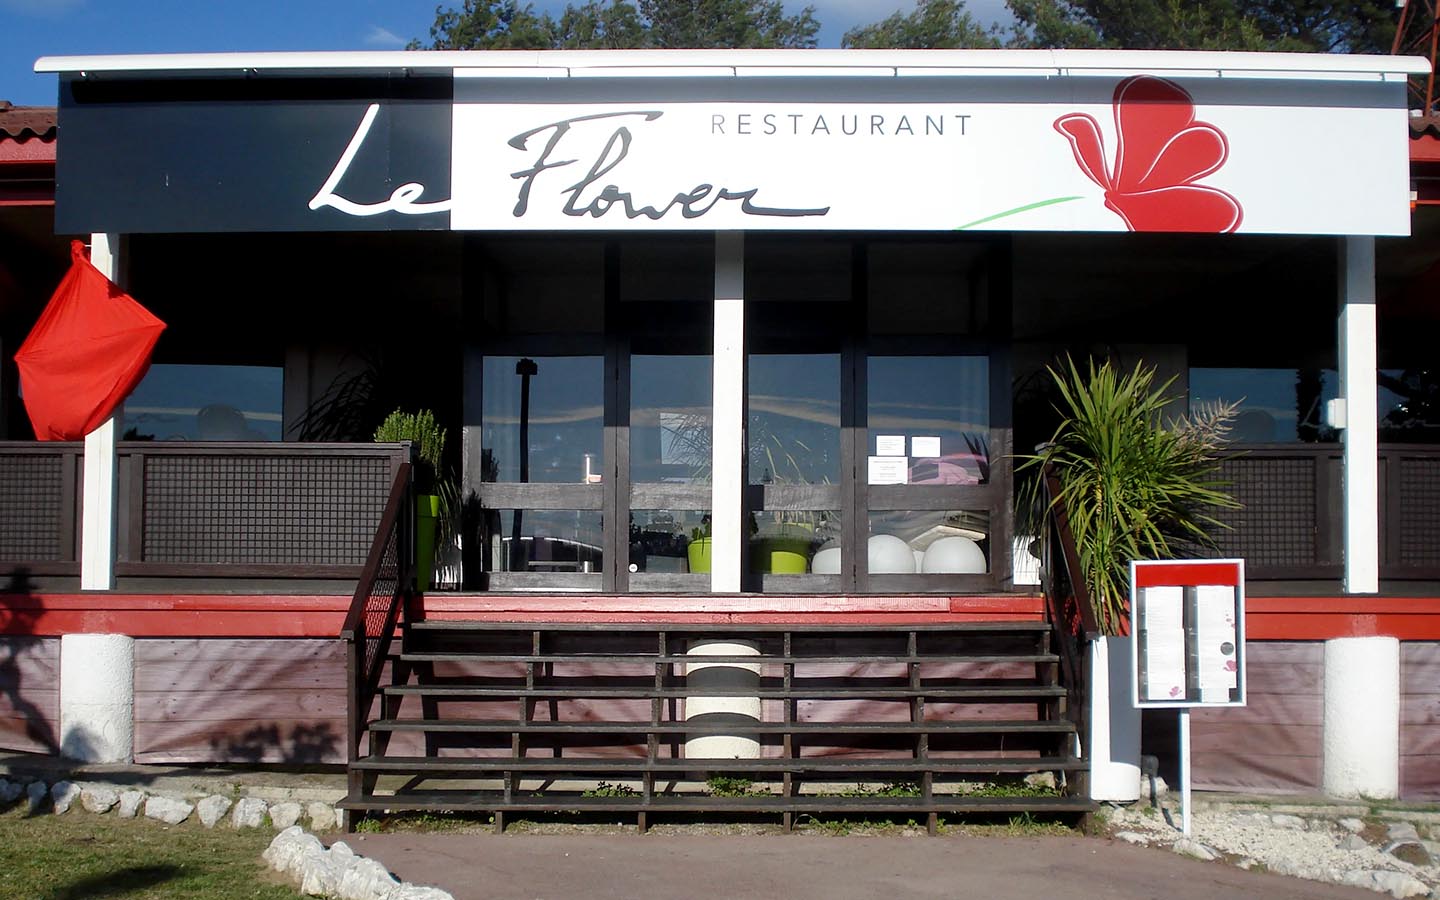 Bâche Restaurant Le Flower